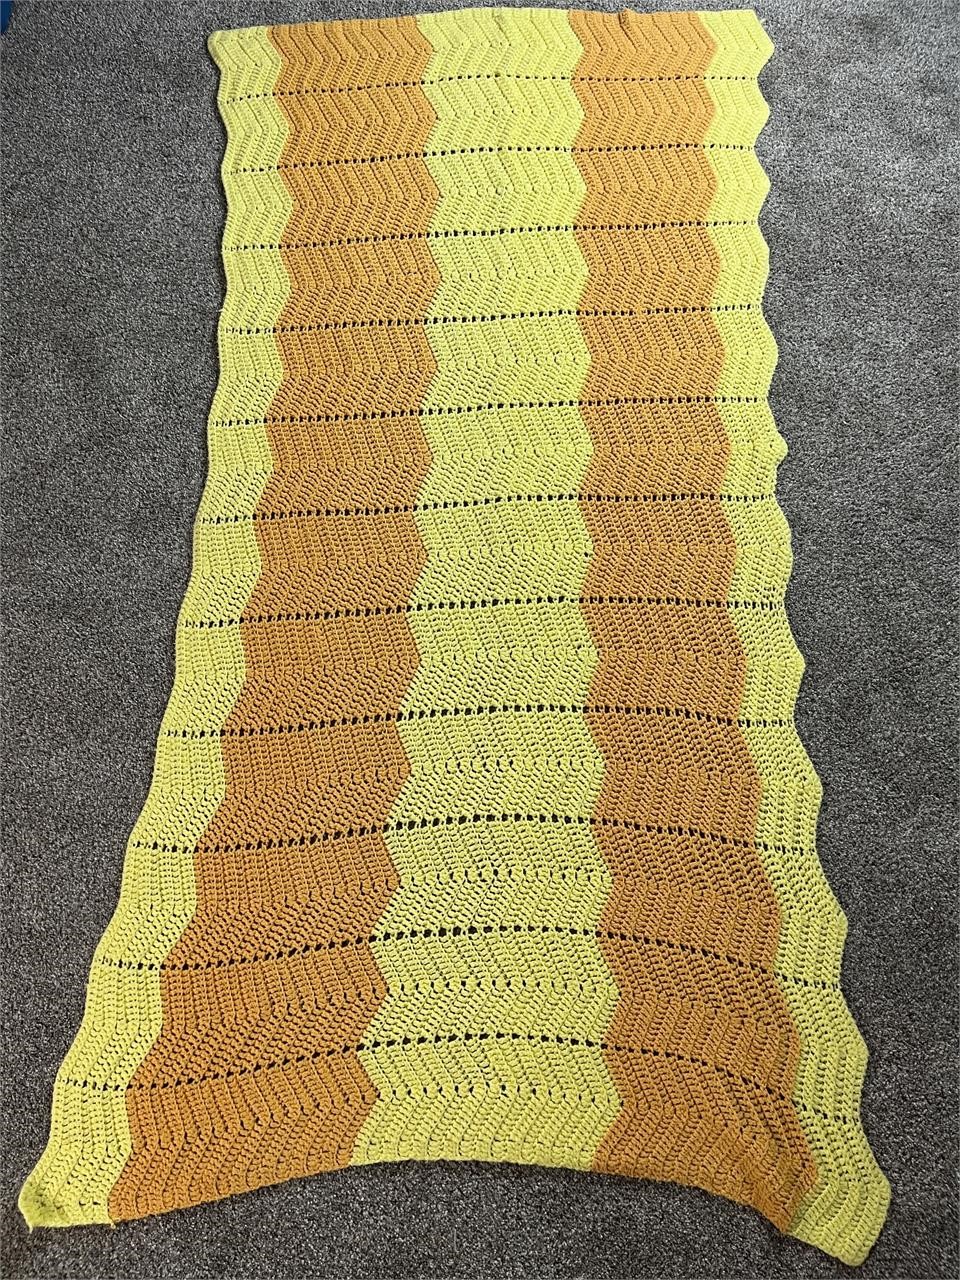 Handmade Yellow/Orange Crotchet Blanket